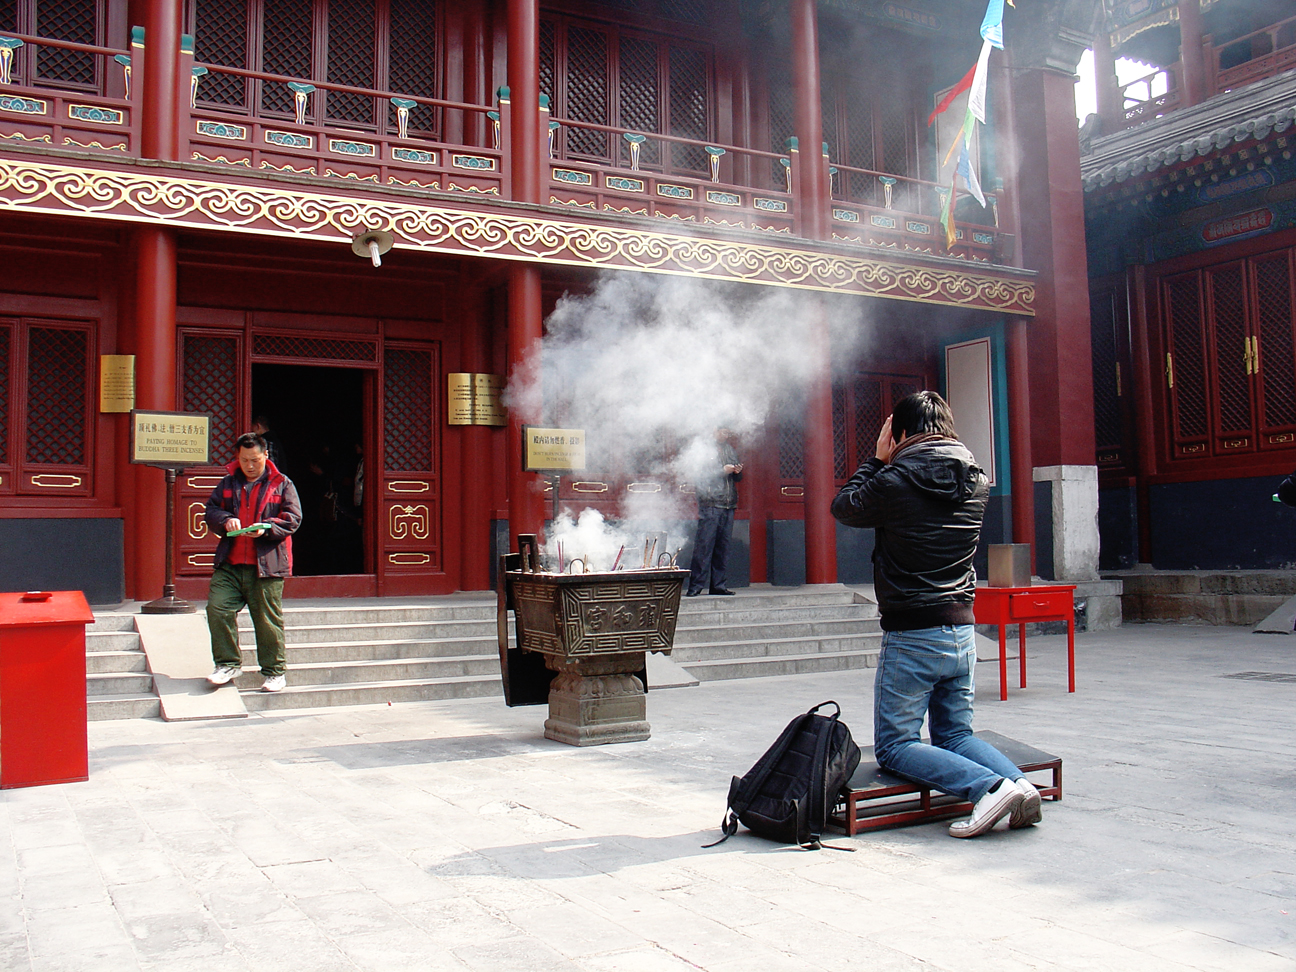 A man praying while using incenses